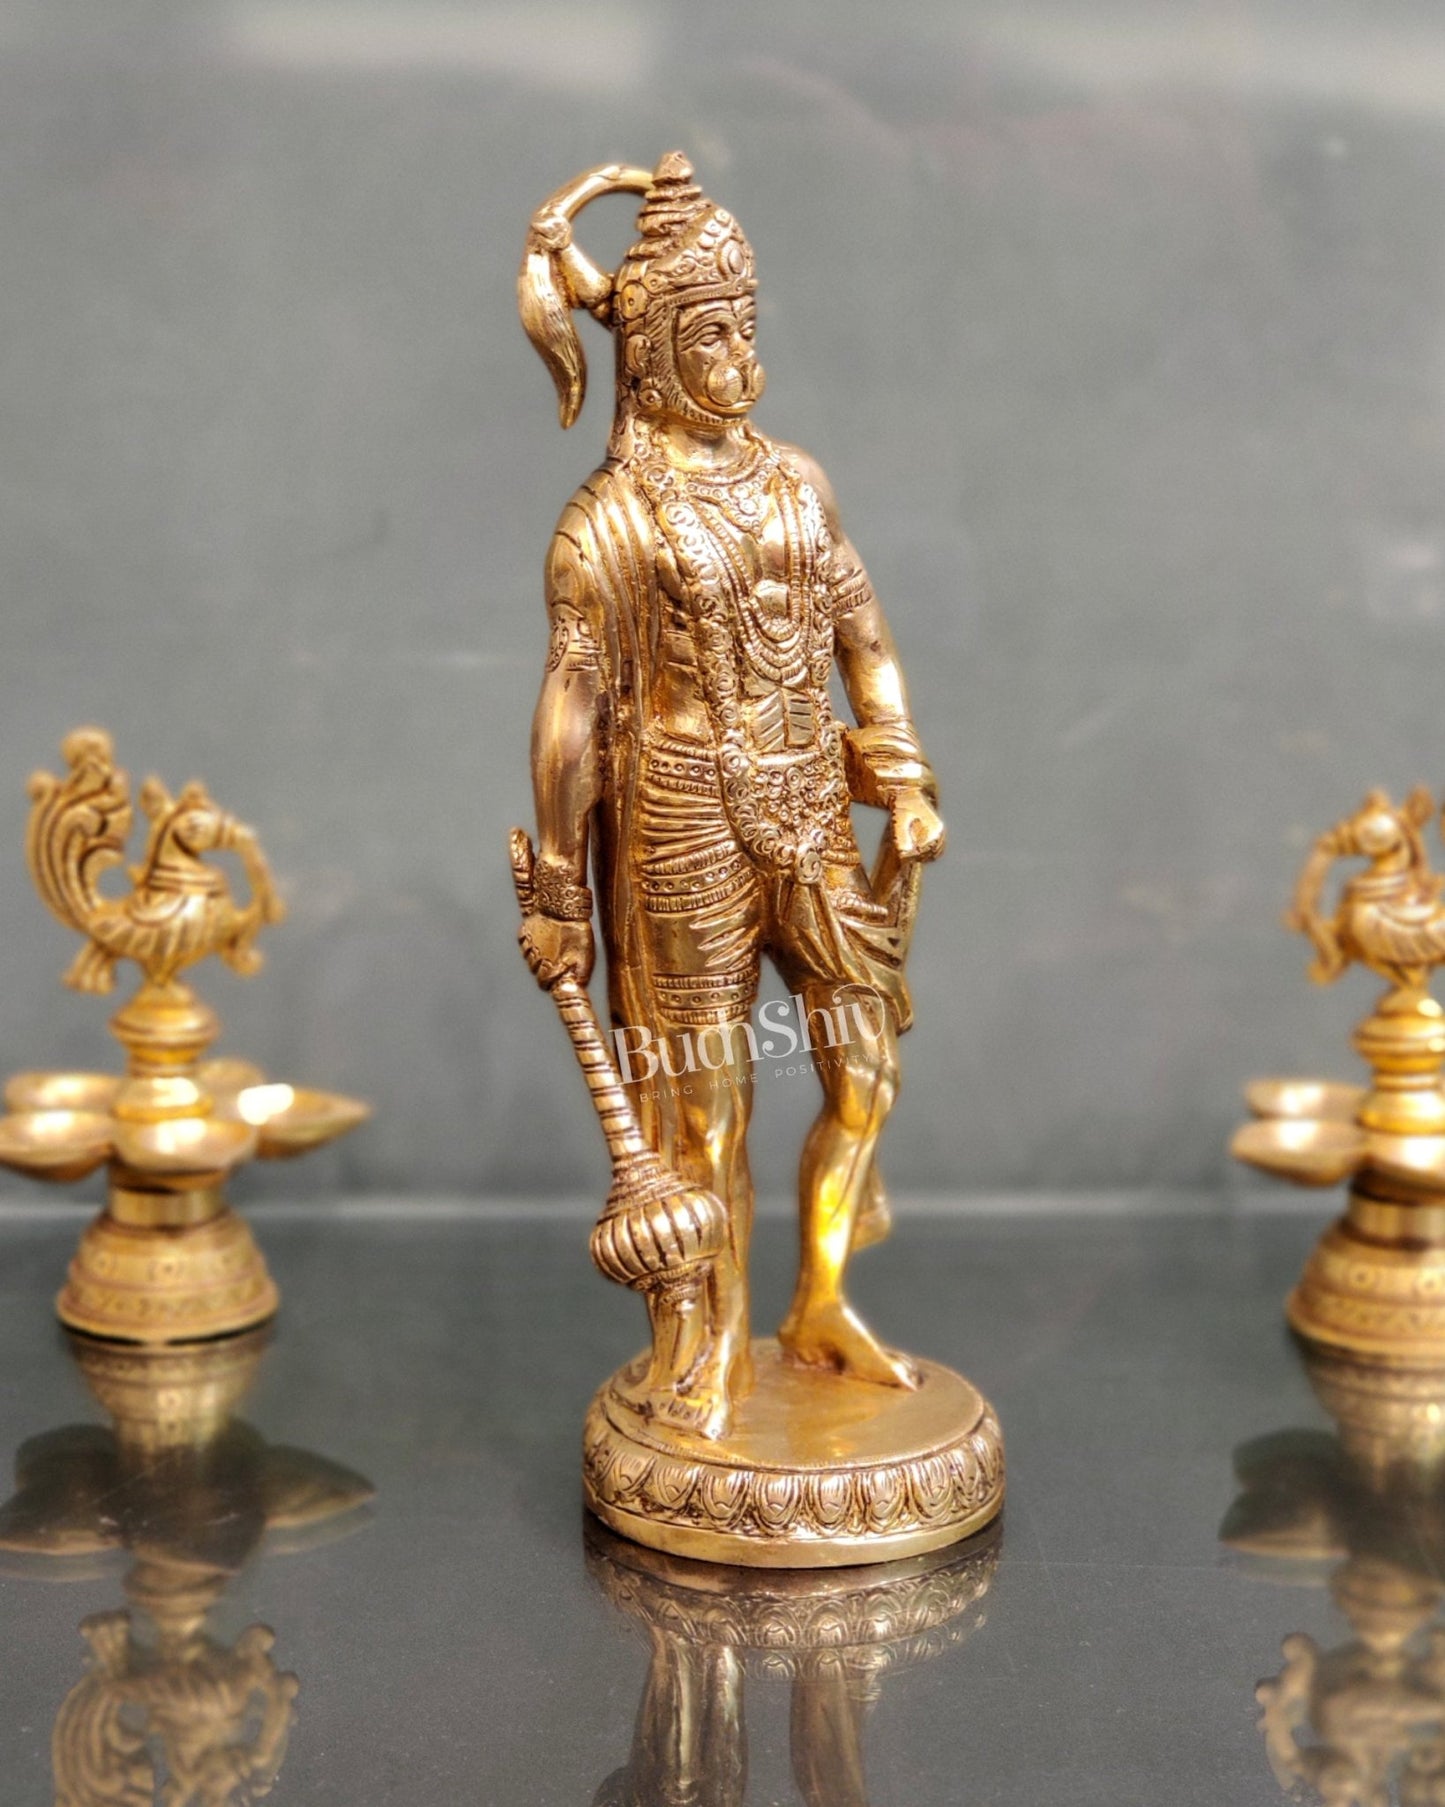 Handmade Brass Lord Hanuman Statue | 10" Height - Budhshiv.com